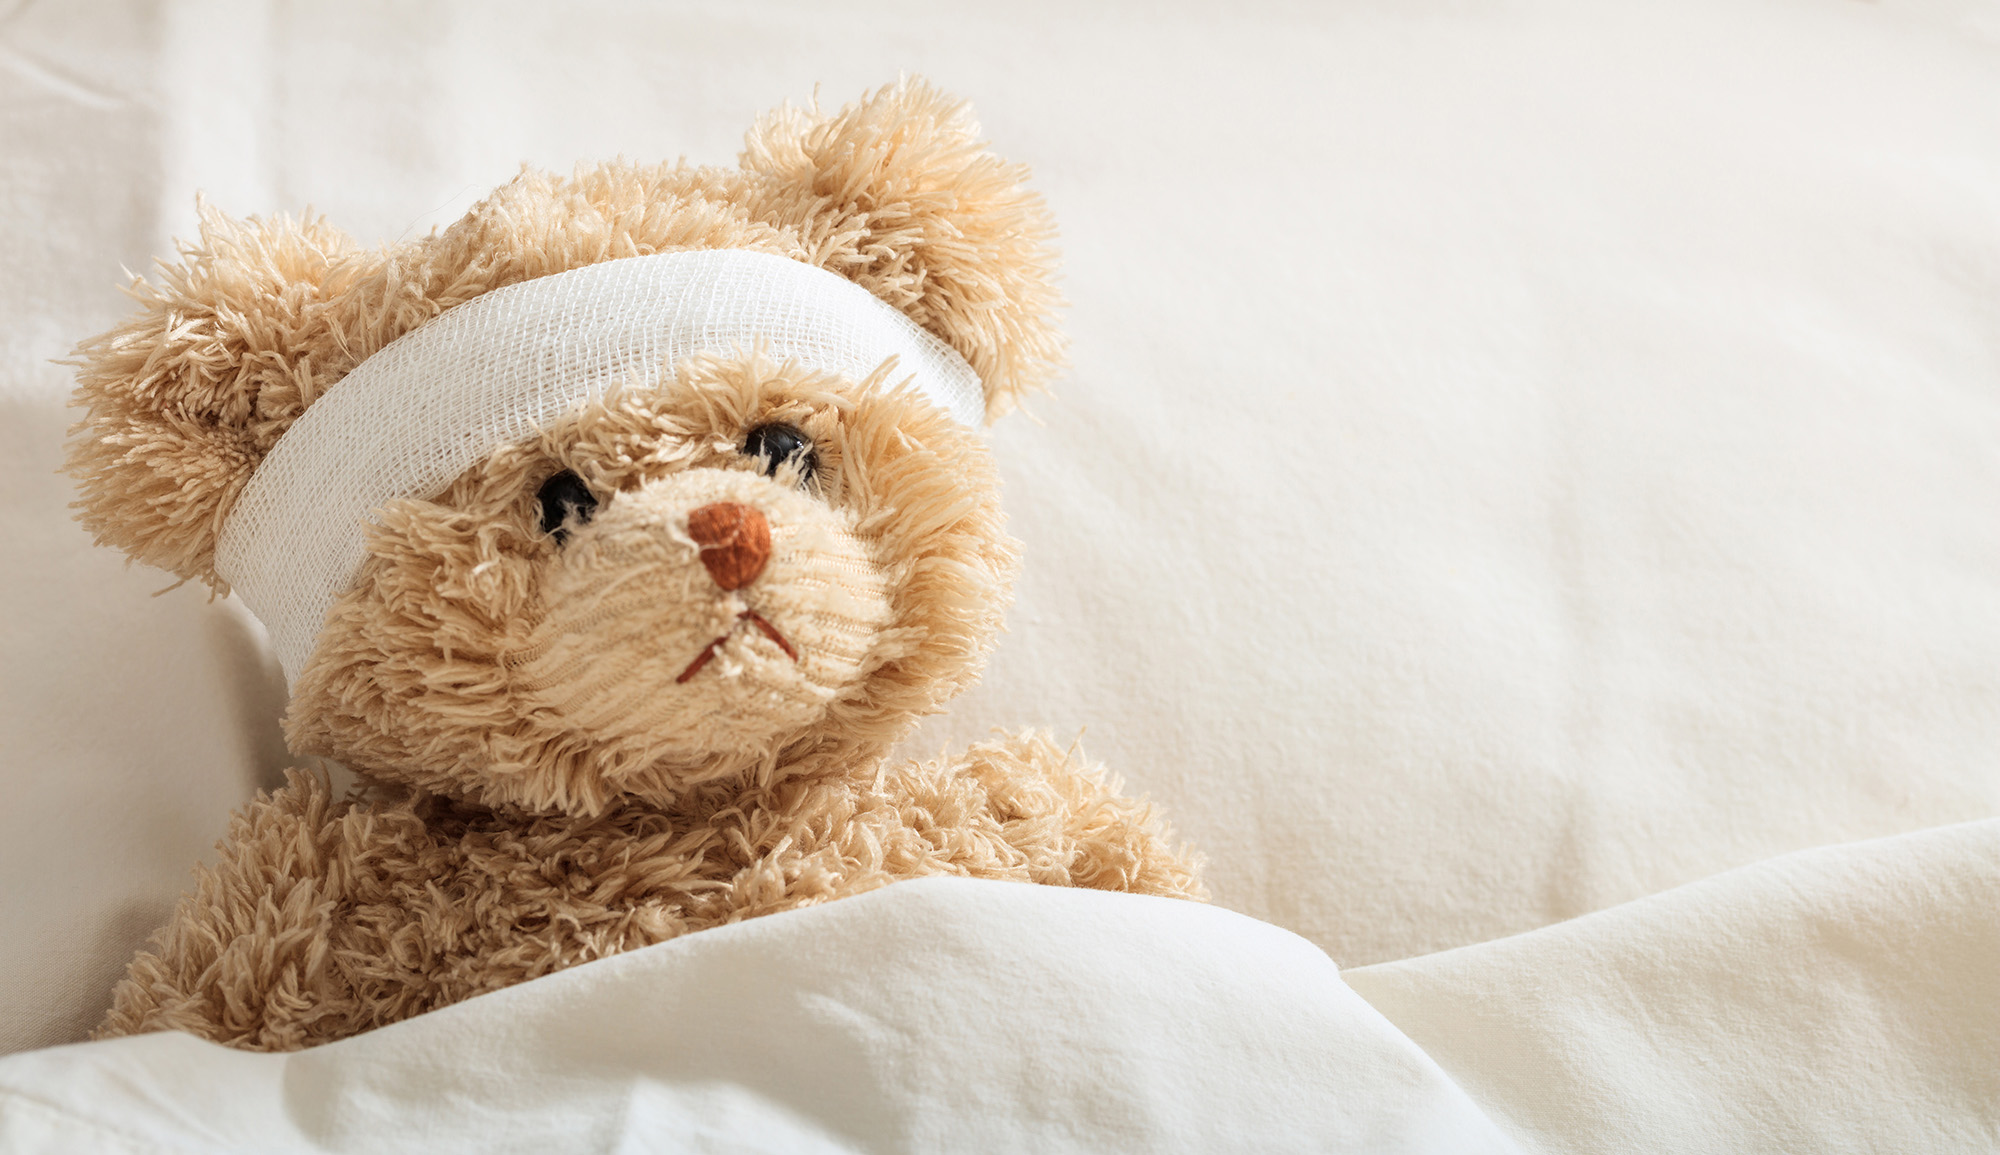 teddy-bear-sick-in-the-hospital-2021-08-26-16-34-26-utc